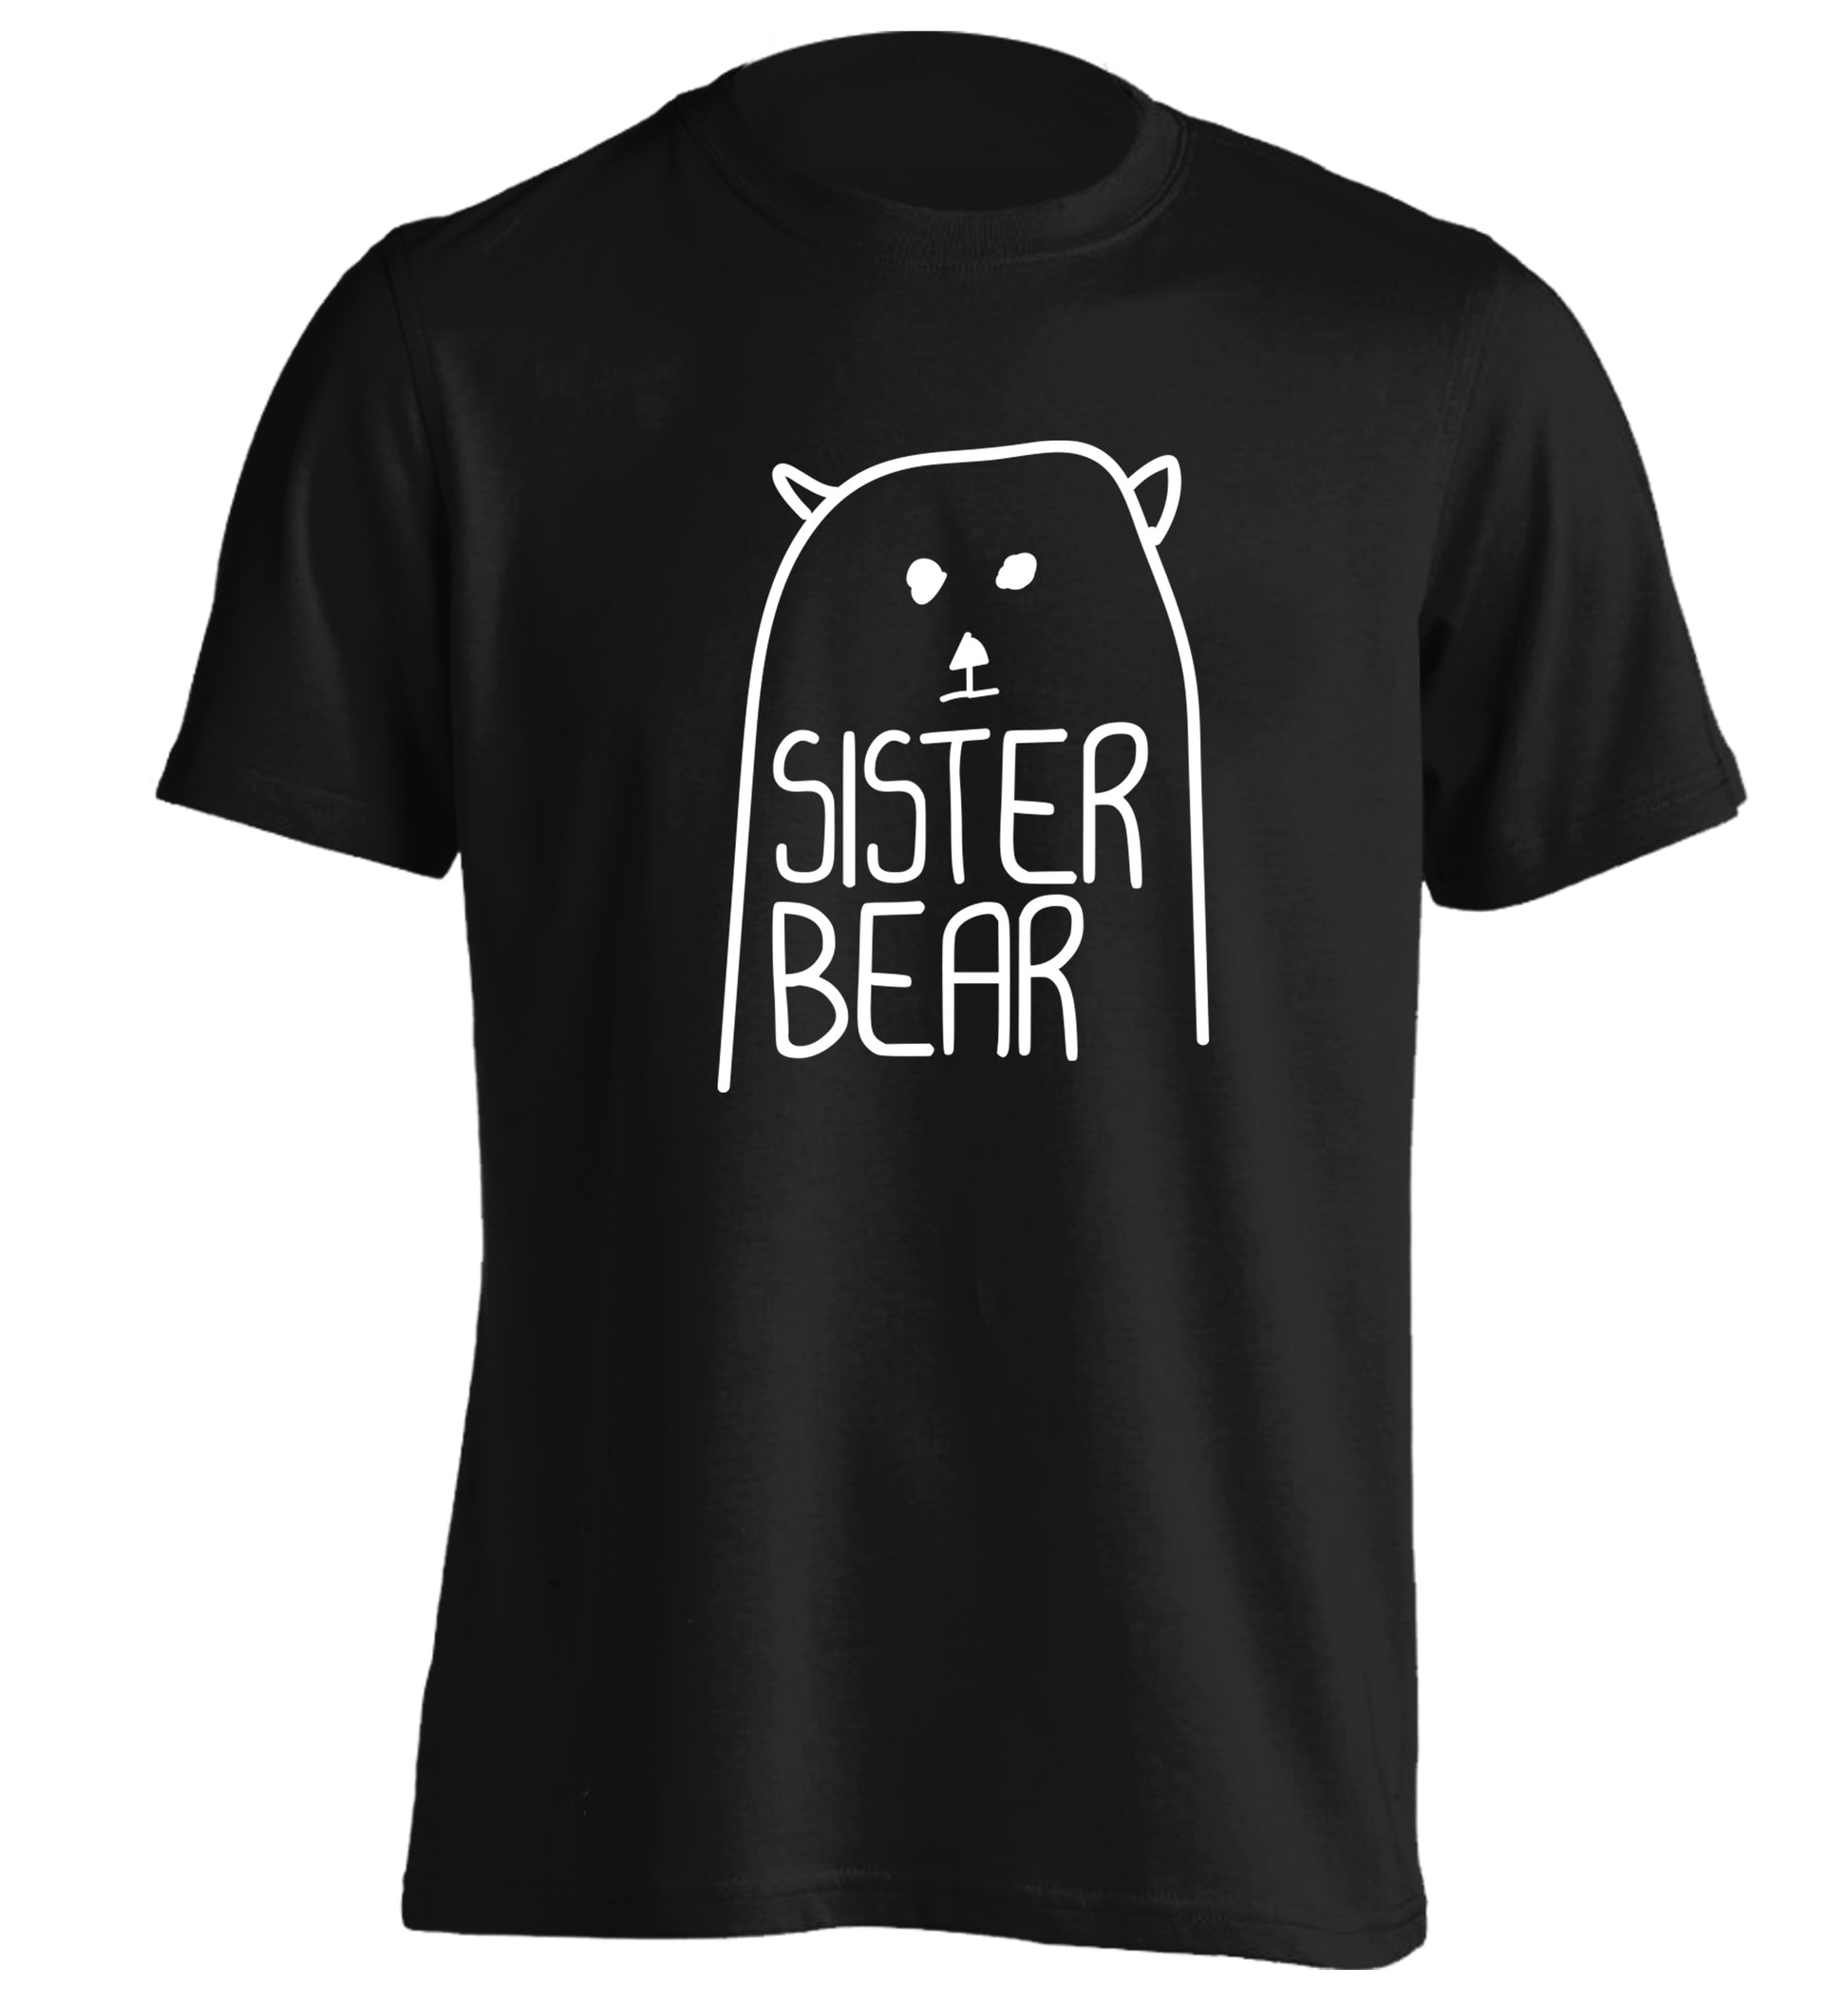 Sister bear adults unisex black Tshirt 2XL